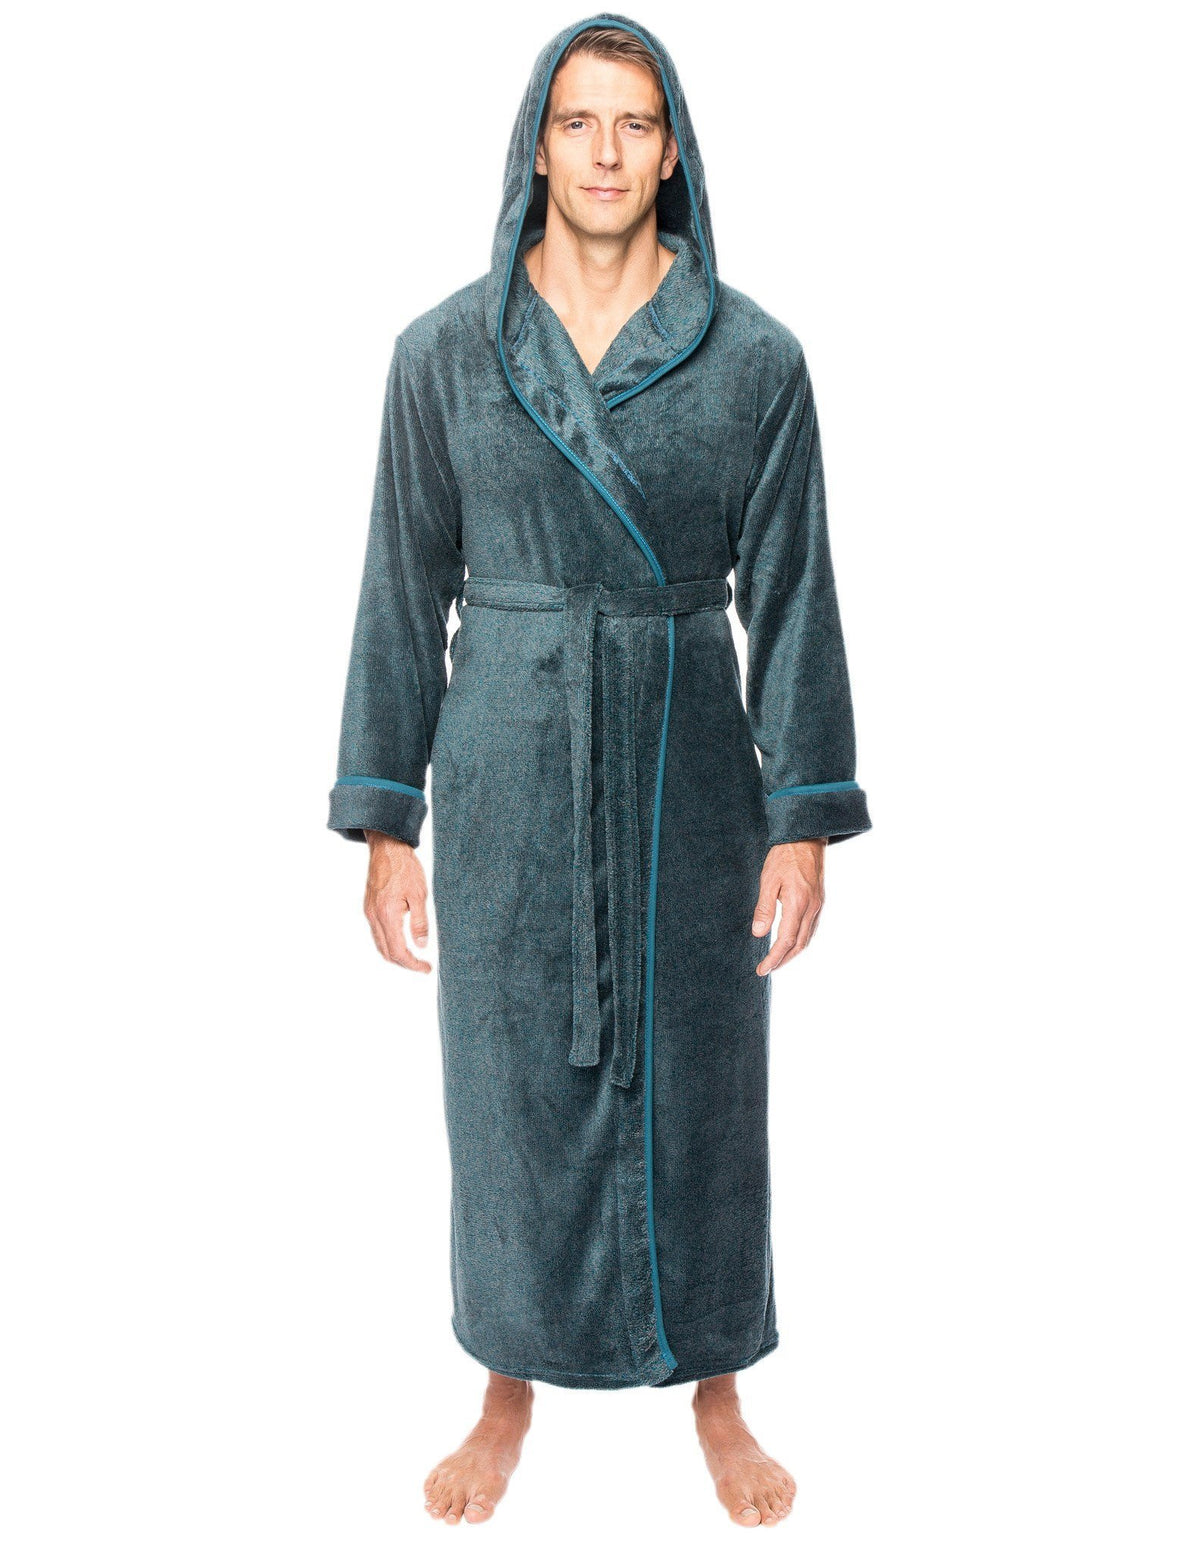 Men's Premium Coral Fleece Long Hooded Plush Spa/Bath Robe - Marl Teal/Grey